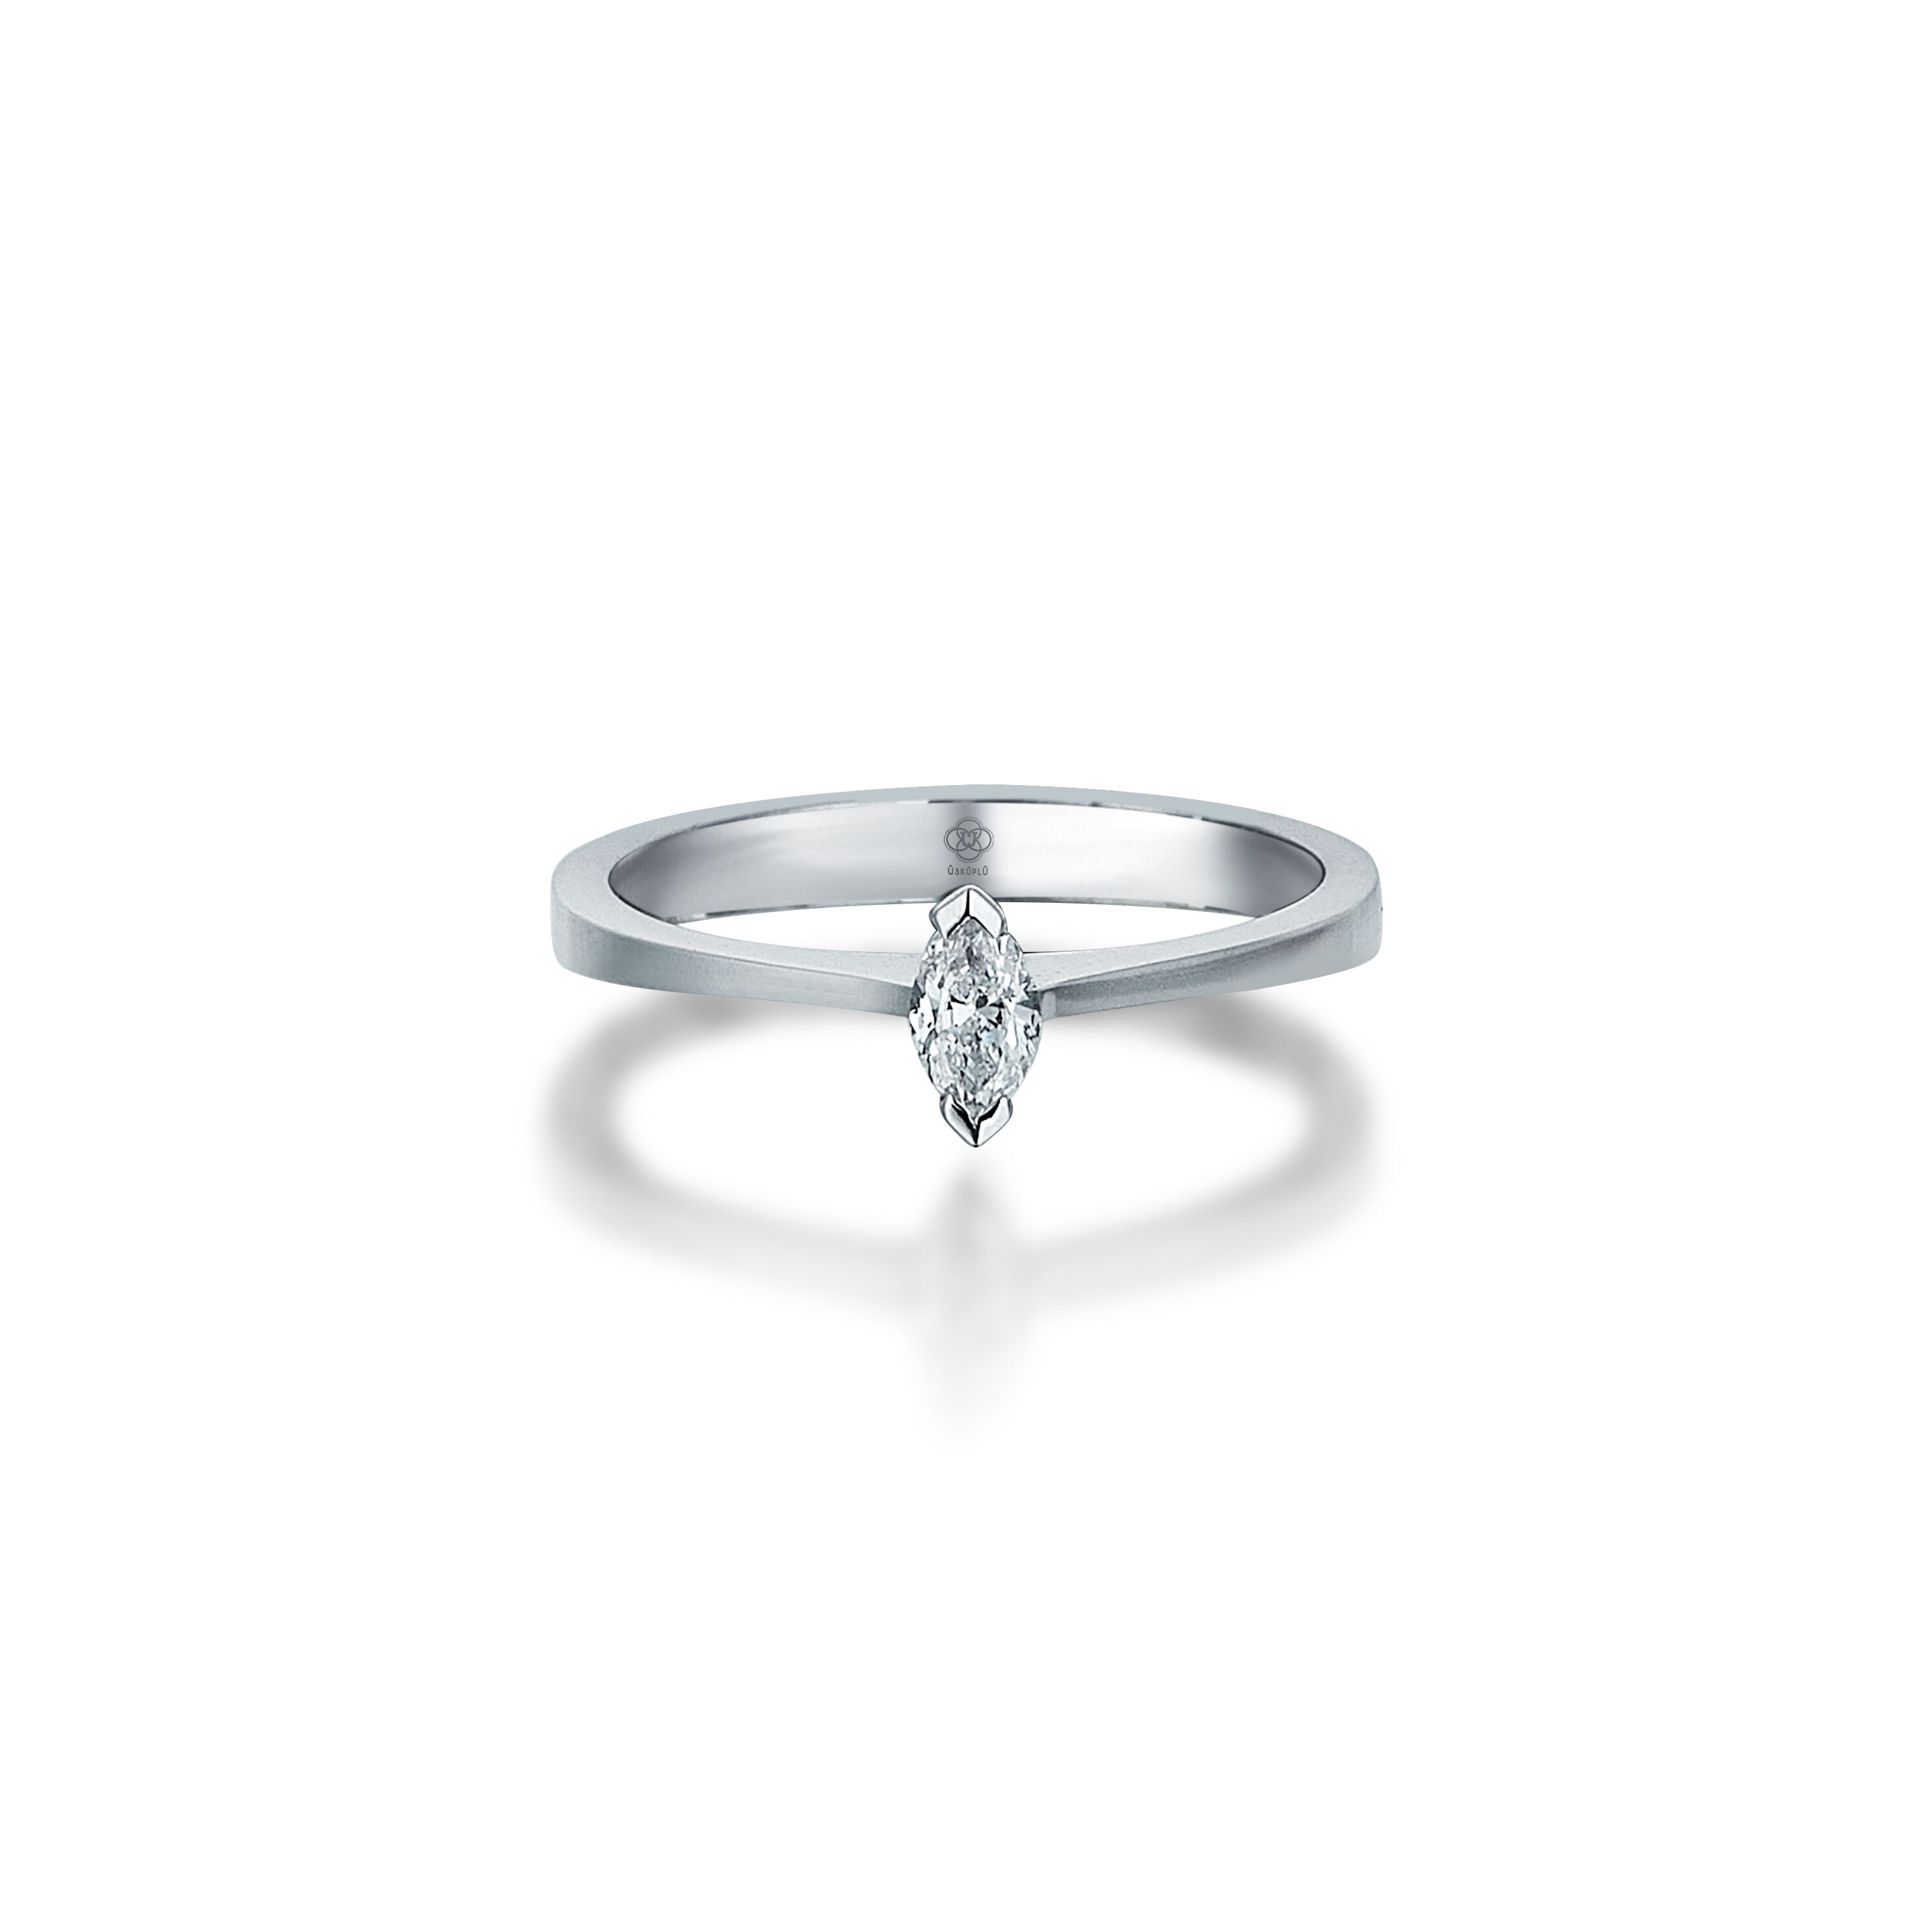 So Simple Marquise Diamond Ring - 2